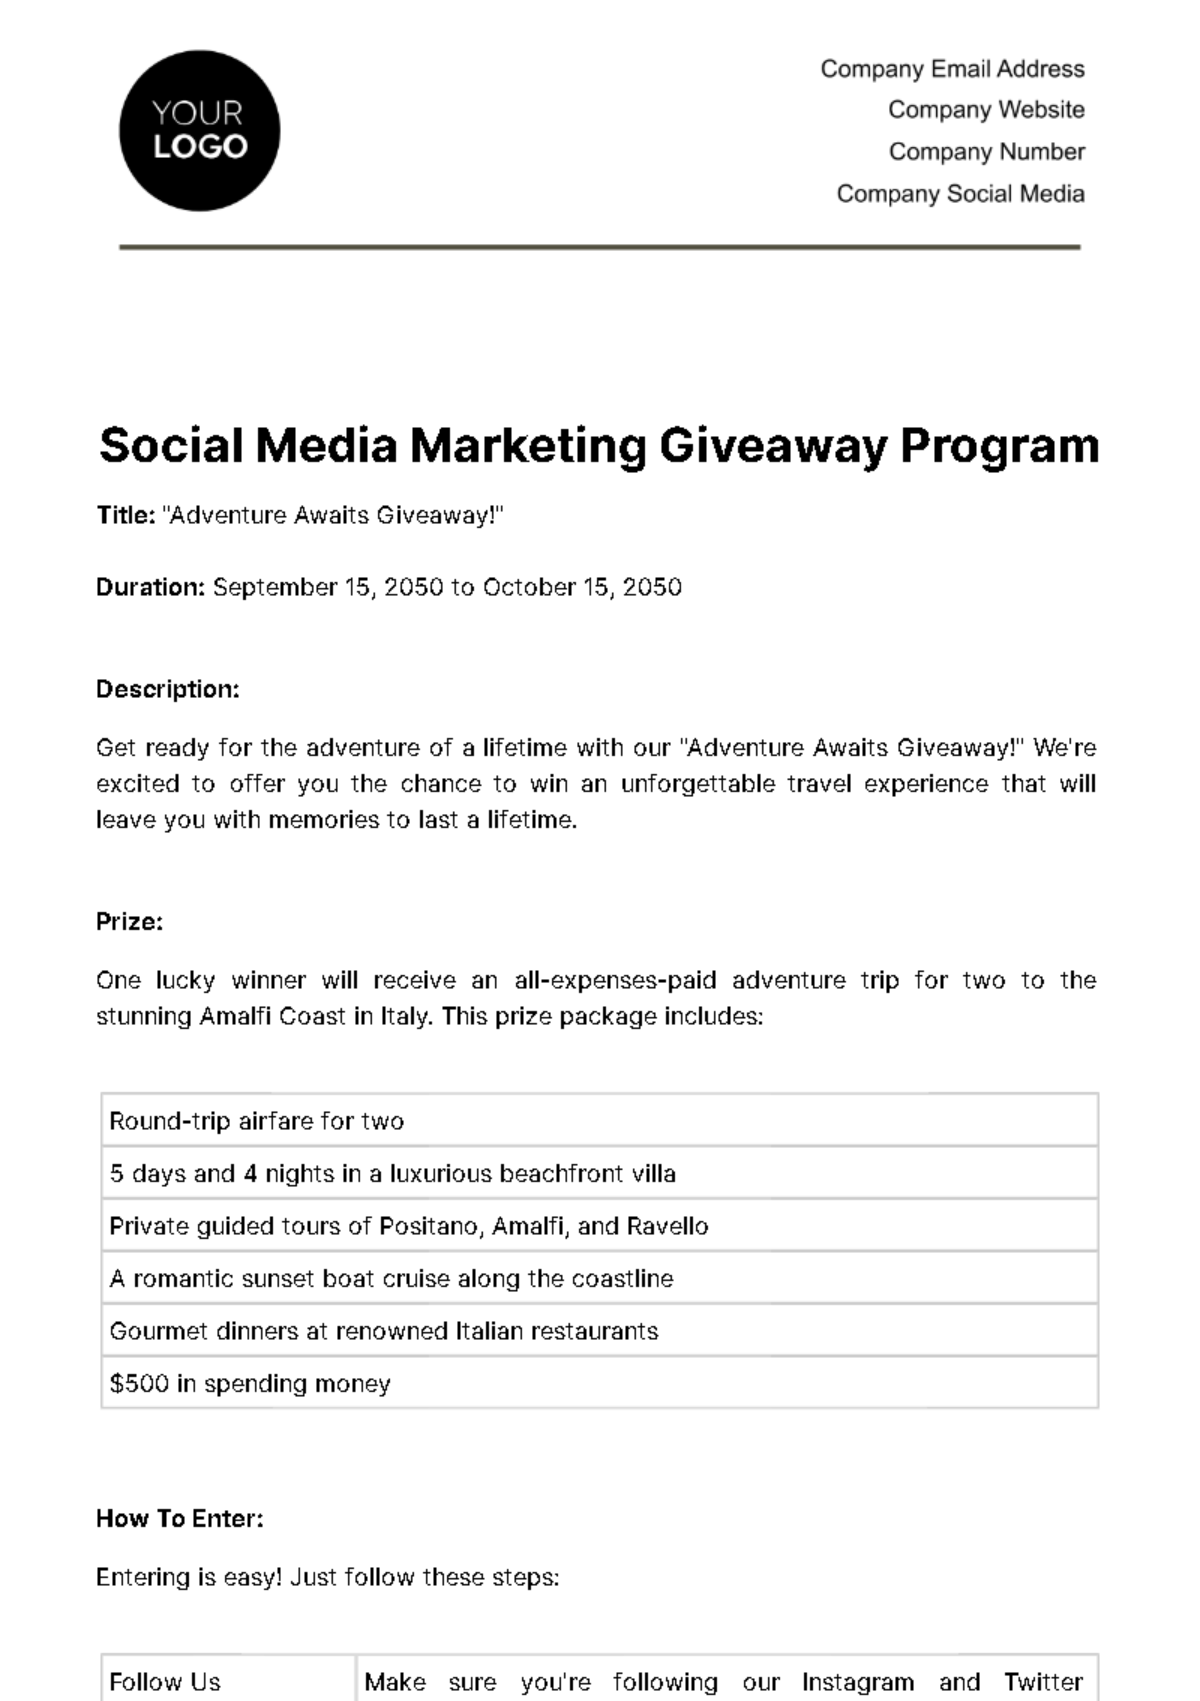 Social Media Marketing Giveaway Program Template